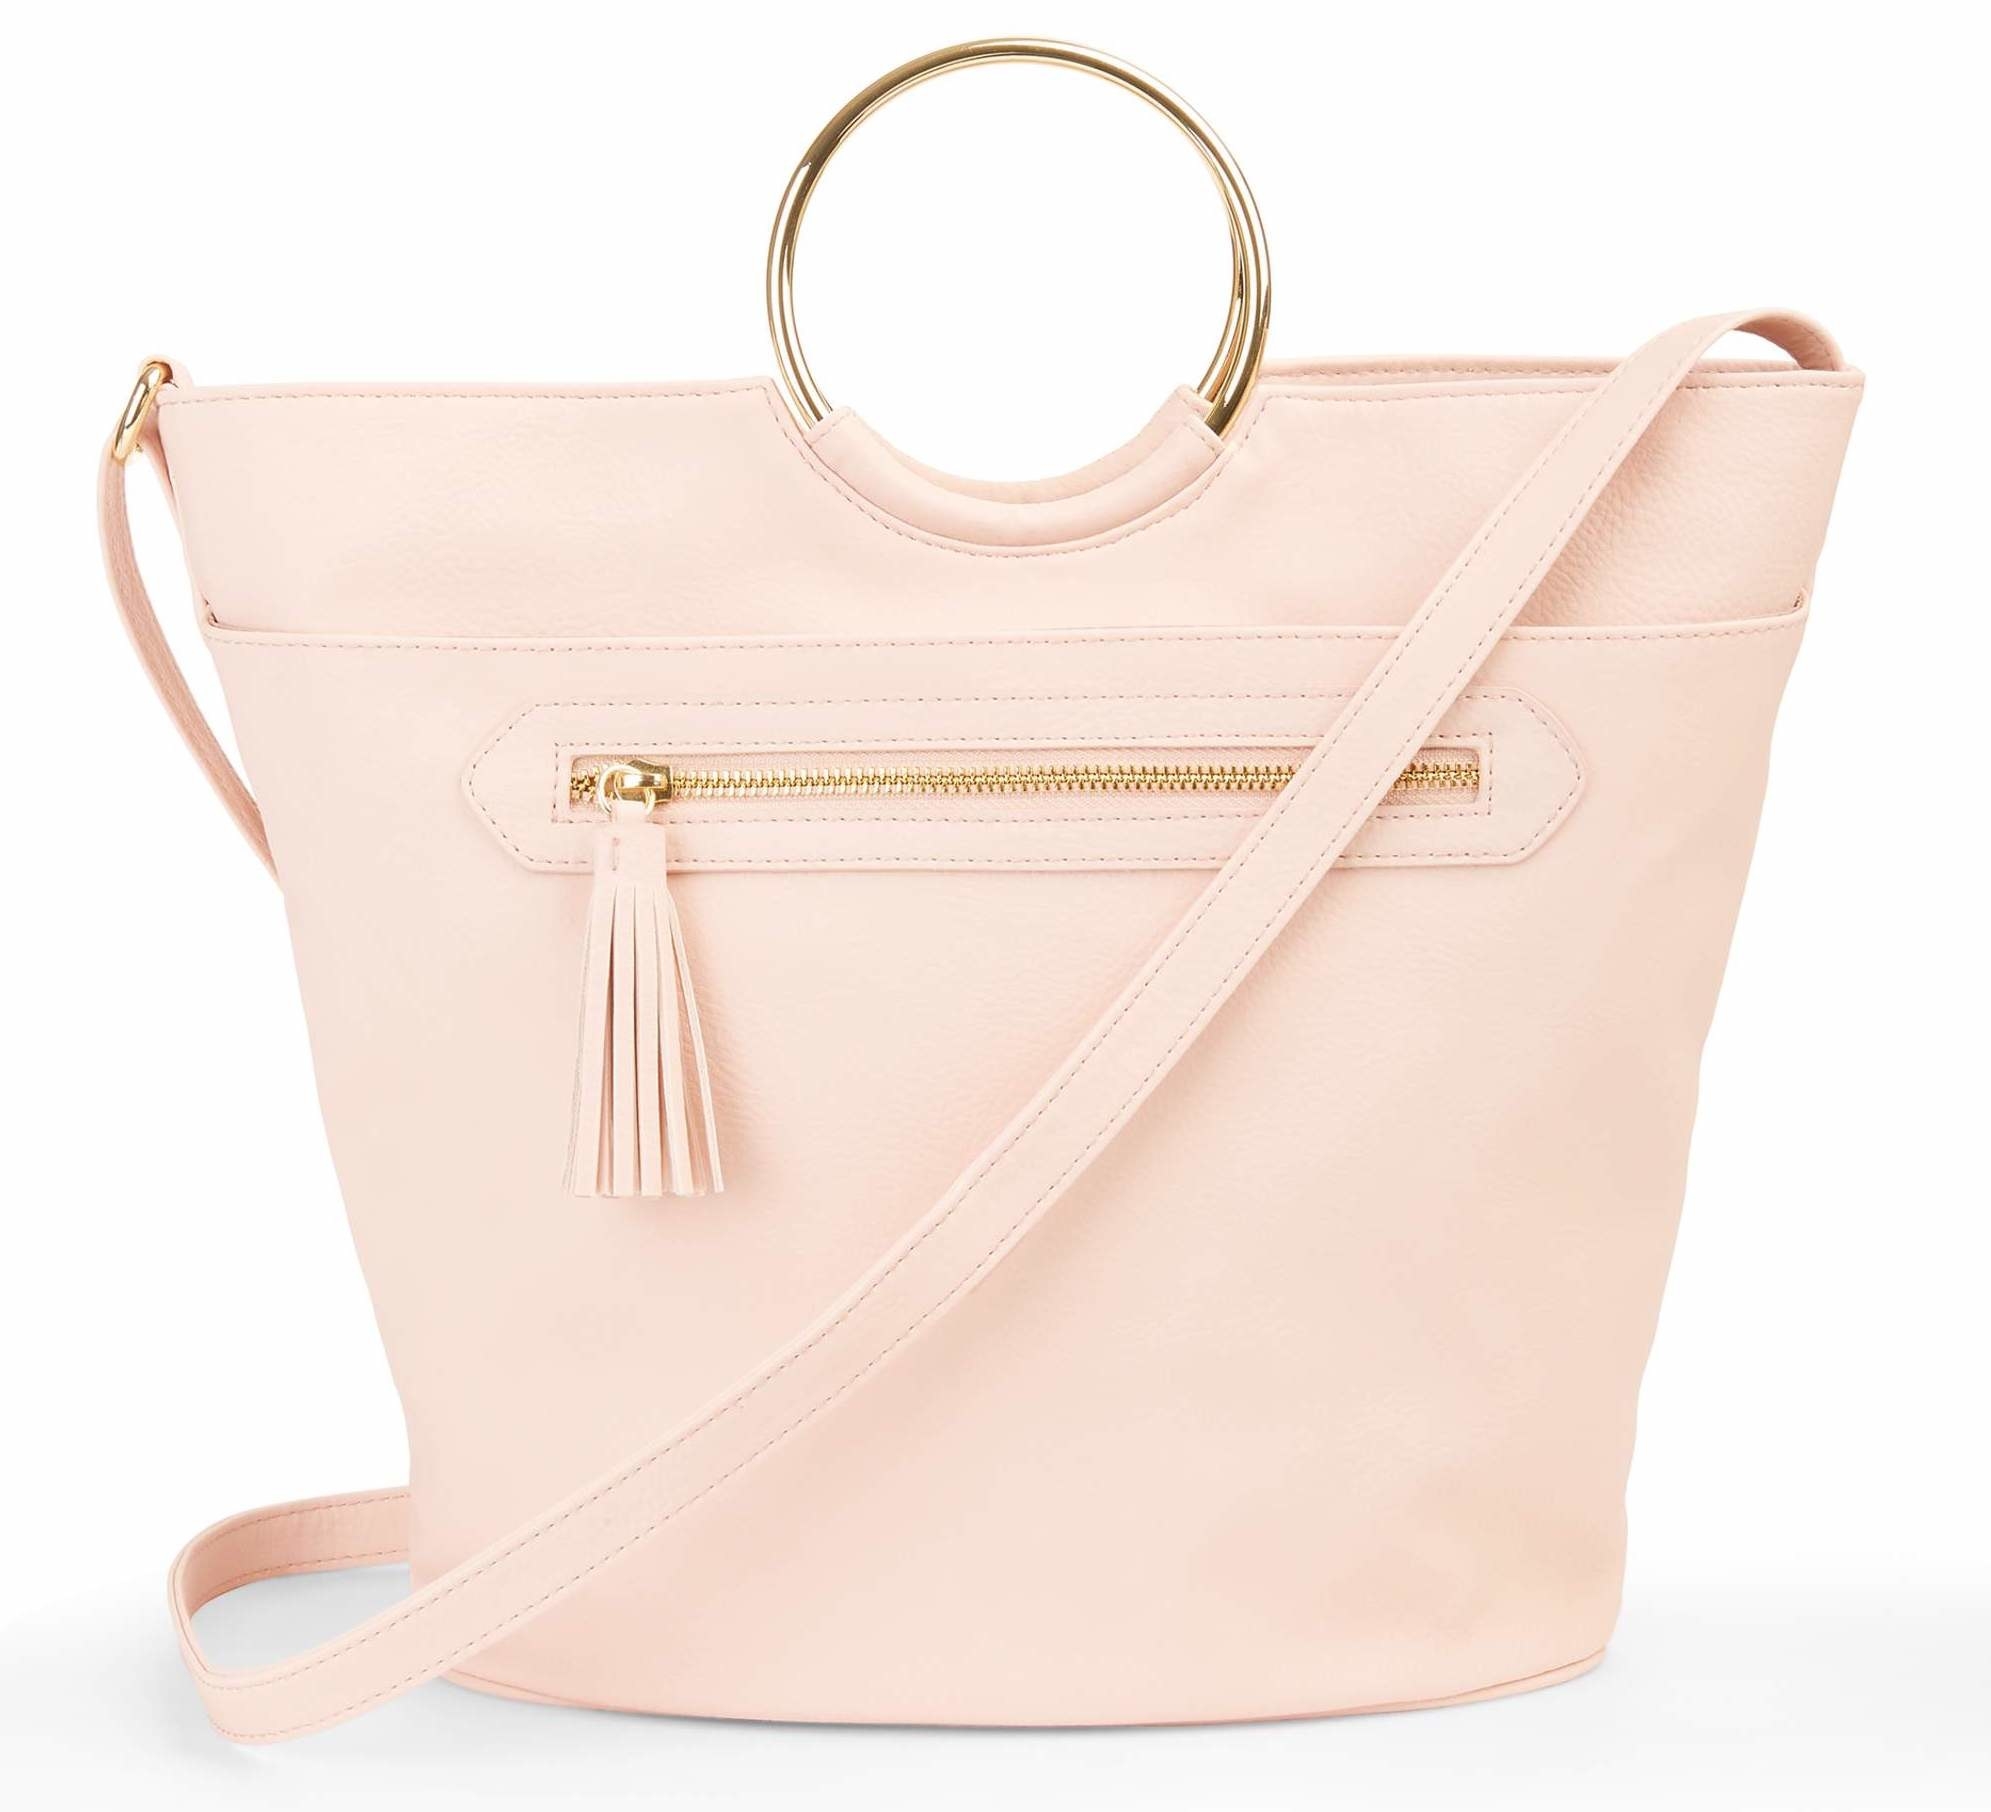 MKP Female Satchel Handbags Shoulder Tote Top Handle Bags with Matching  Wristlet Wallet - Walmart.com